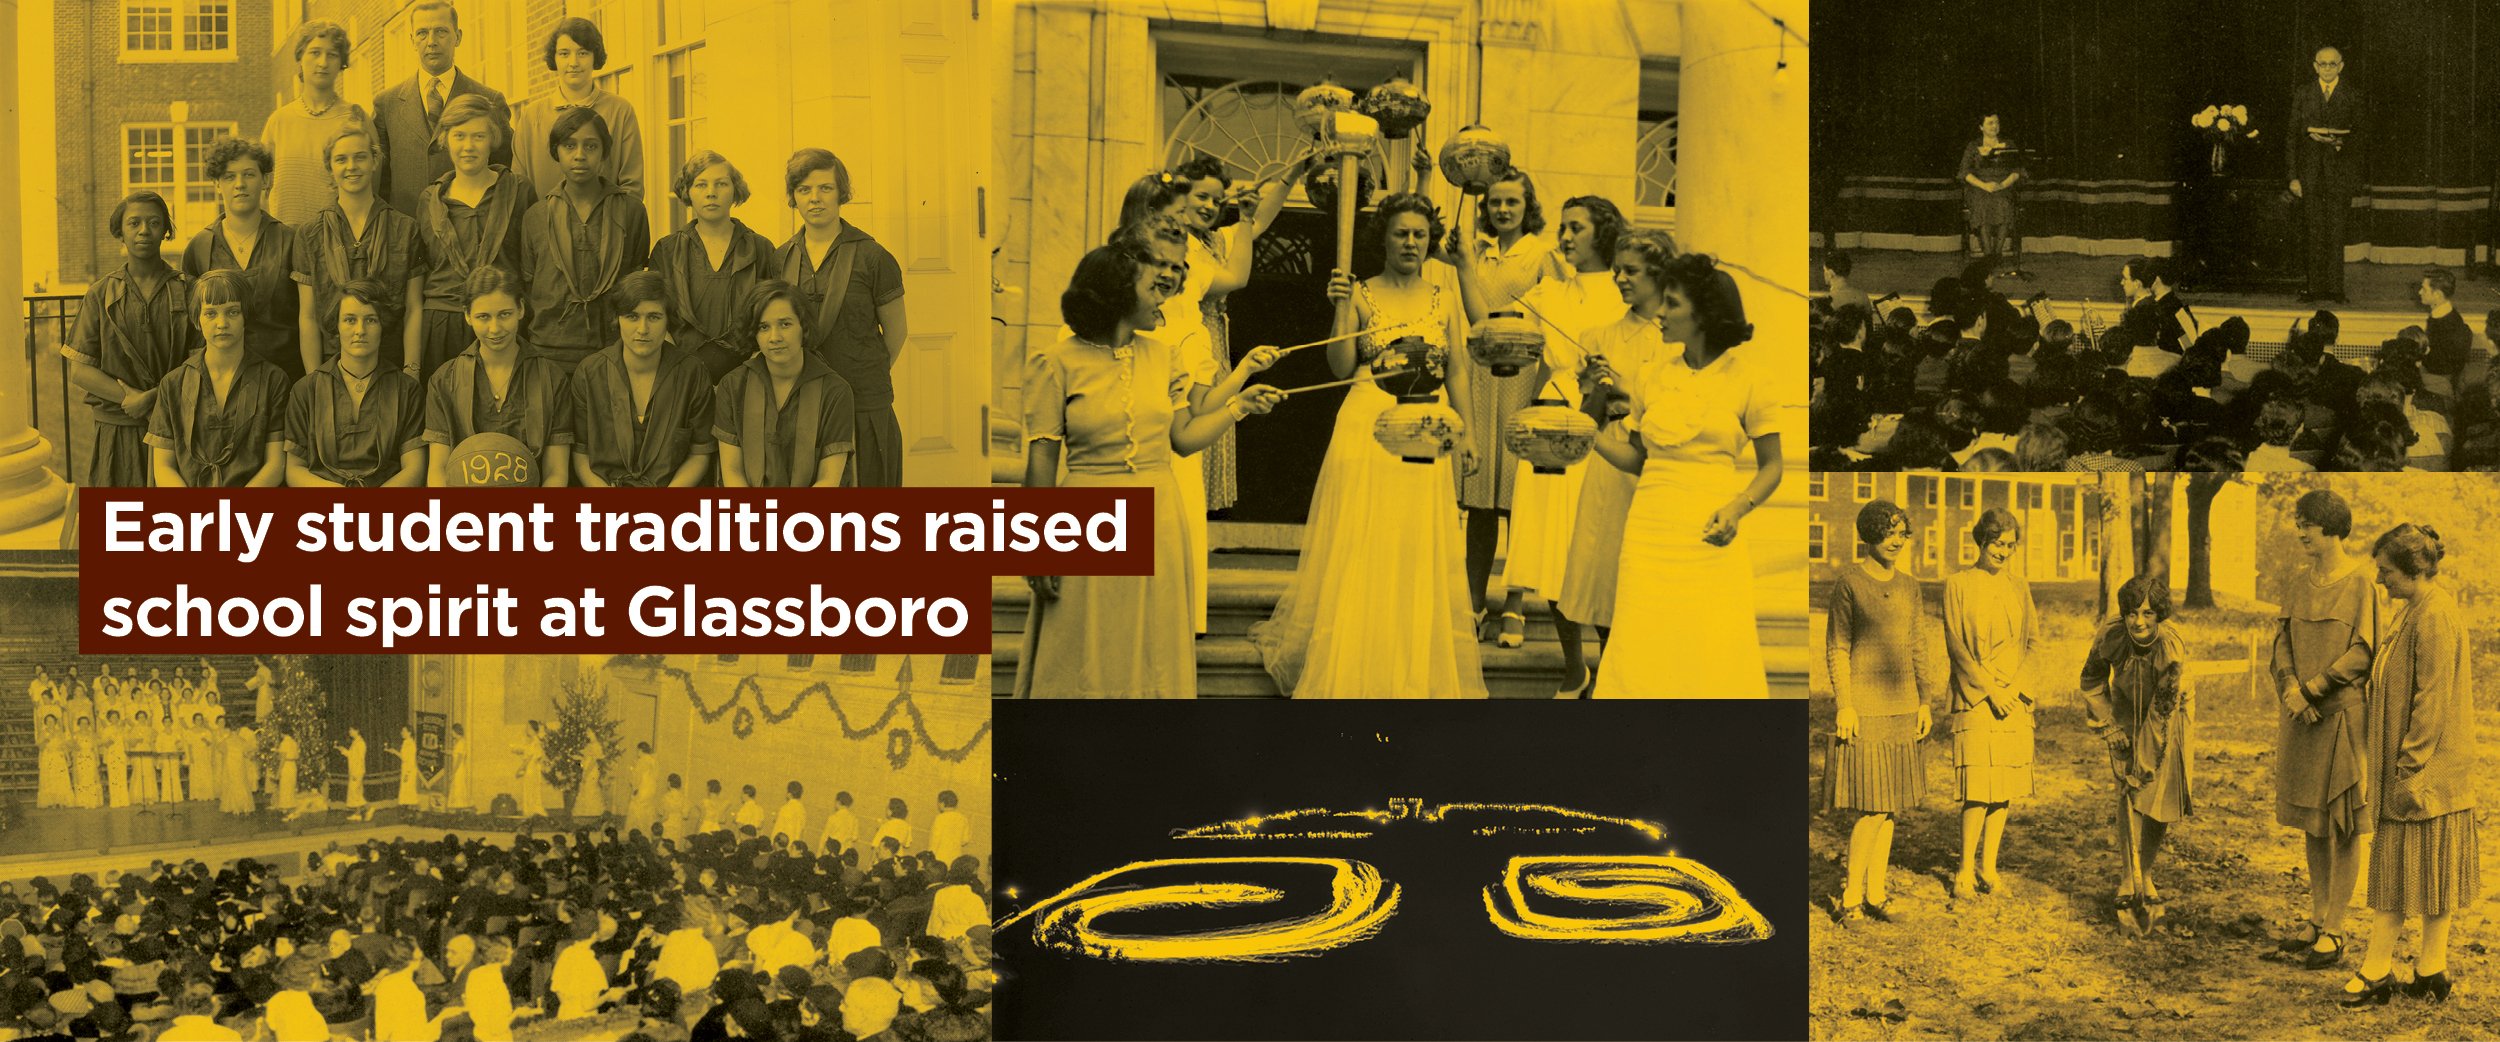 Early student traditions raised school spirit at Glassboro